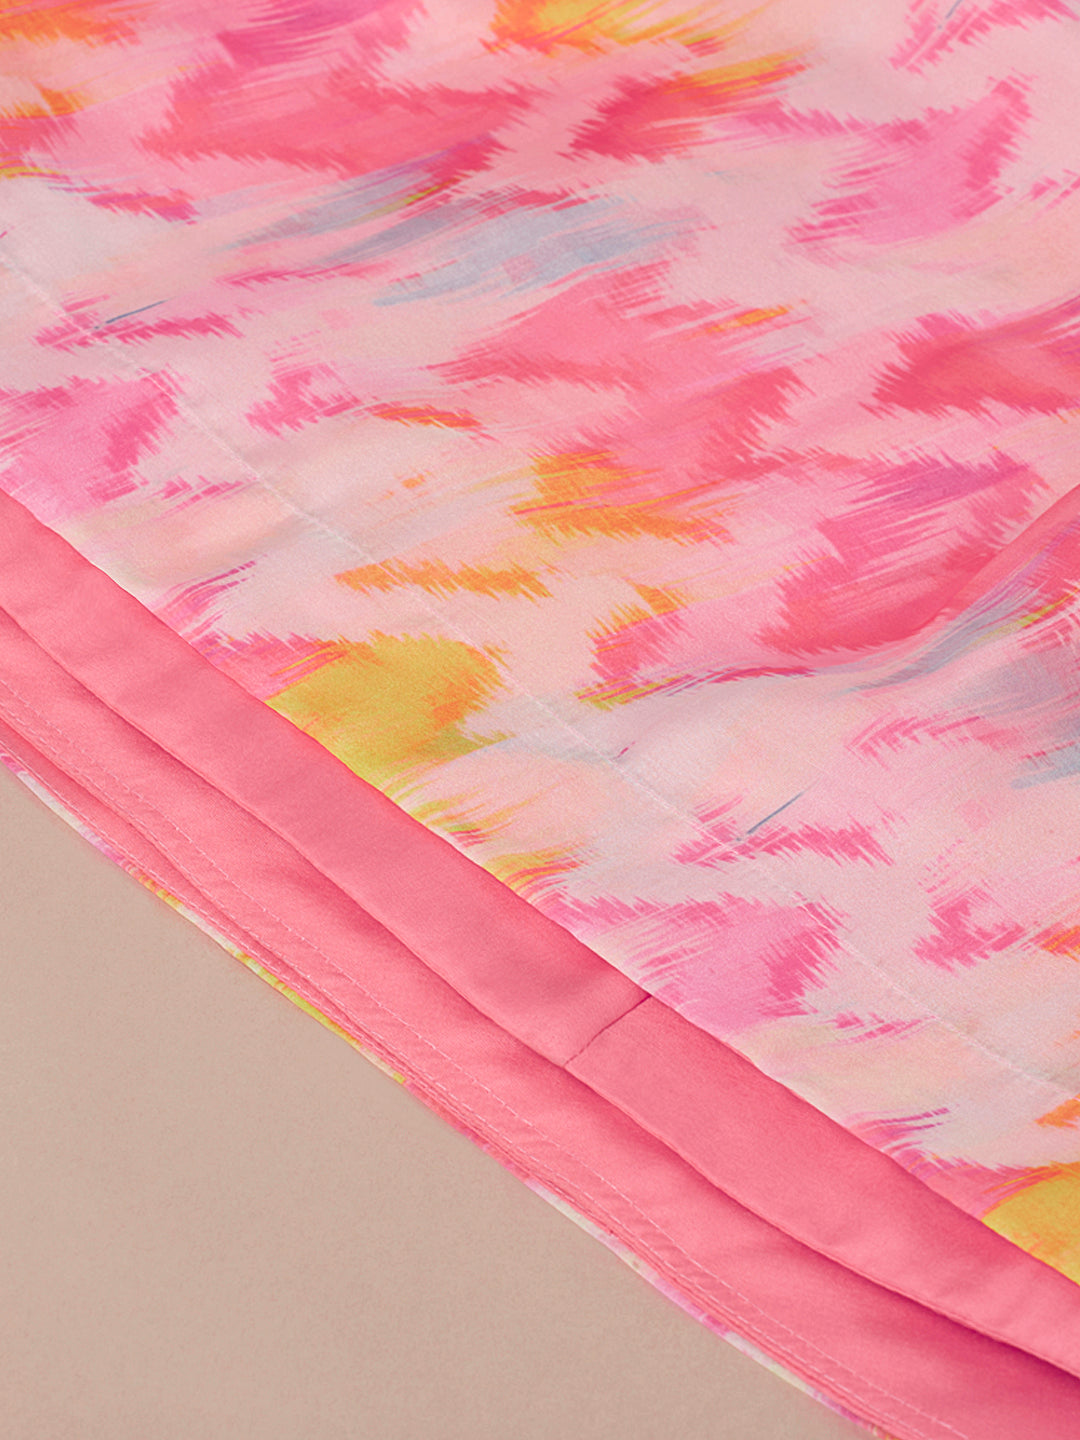 Women's Pink Organza Floral Printed Semi-Stitched Lehenga Choli & Dupatta - Royal Dwells